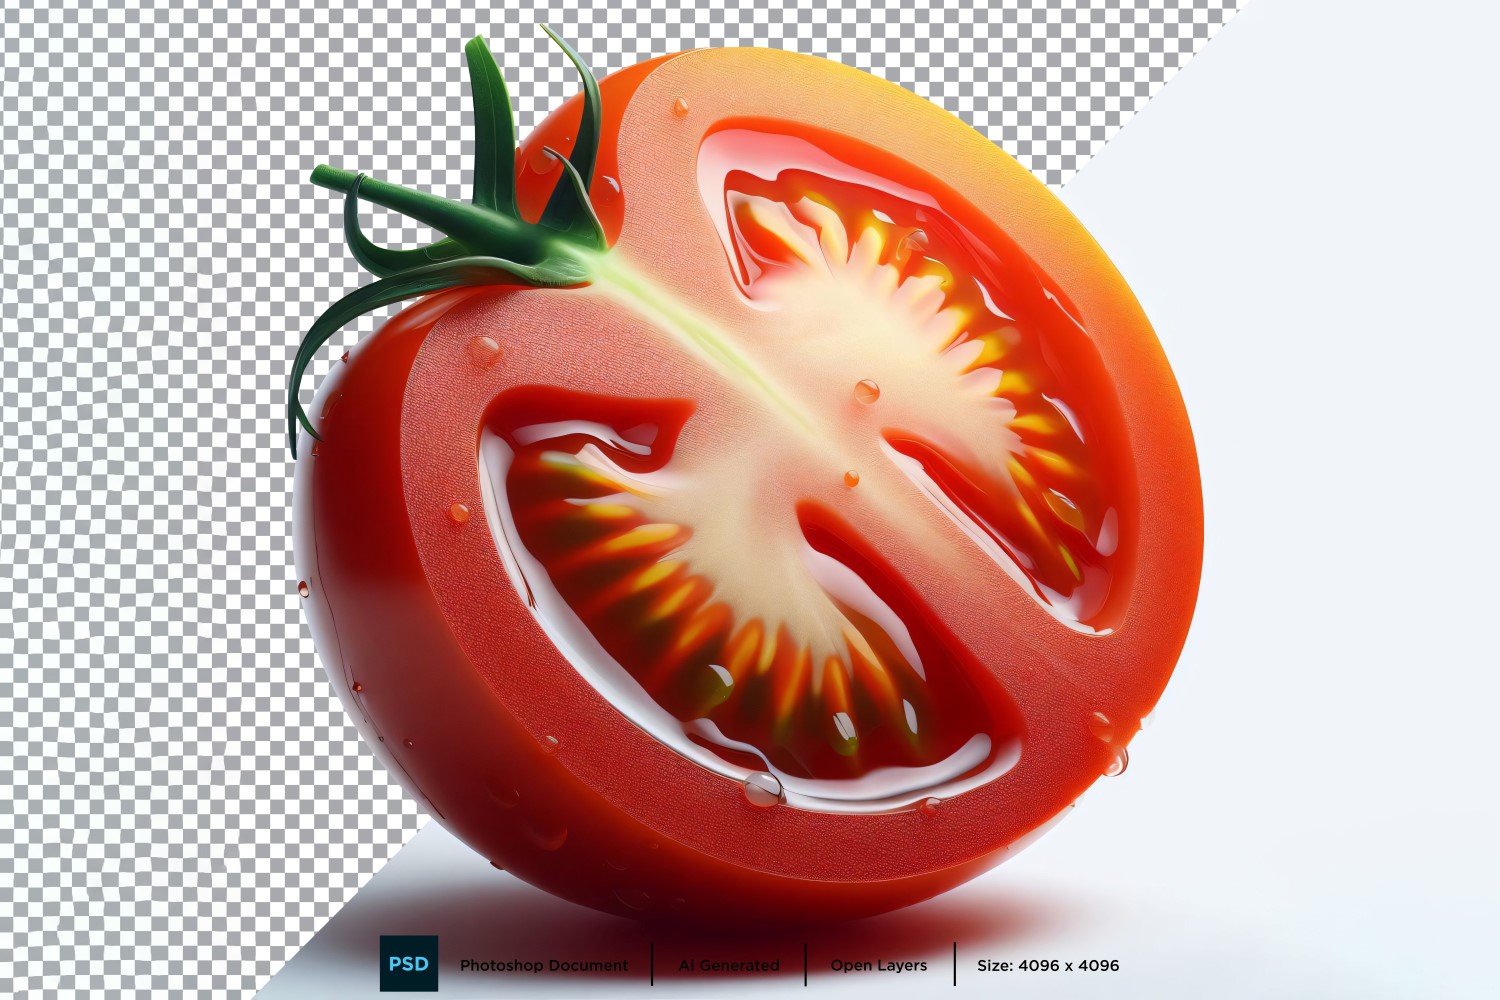 Tomato Fresh Vegetable Transparent background 05